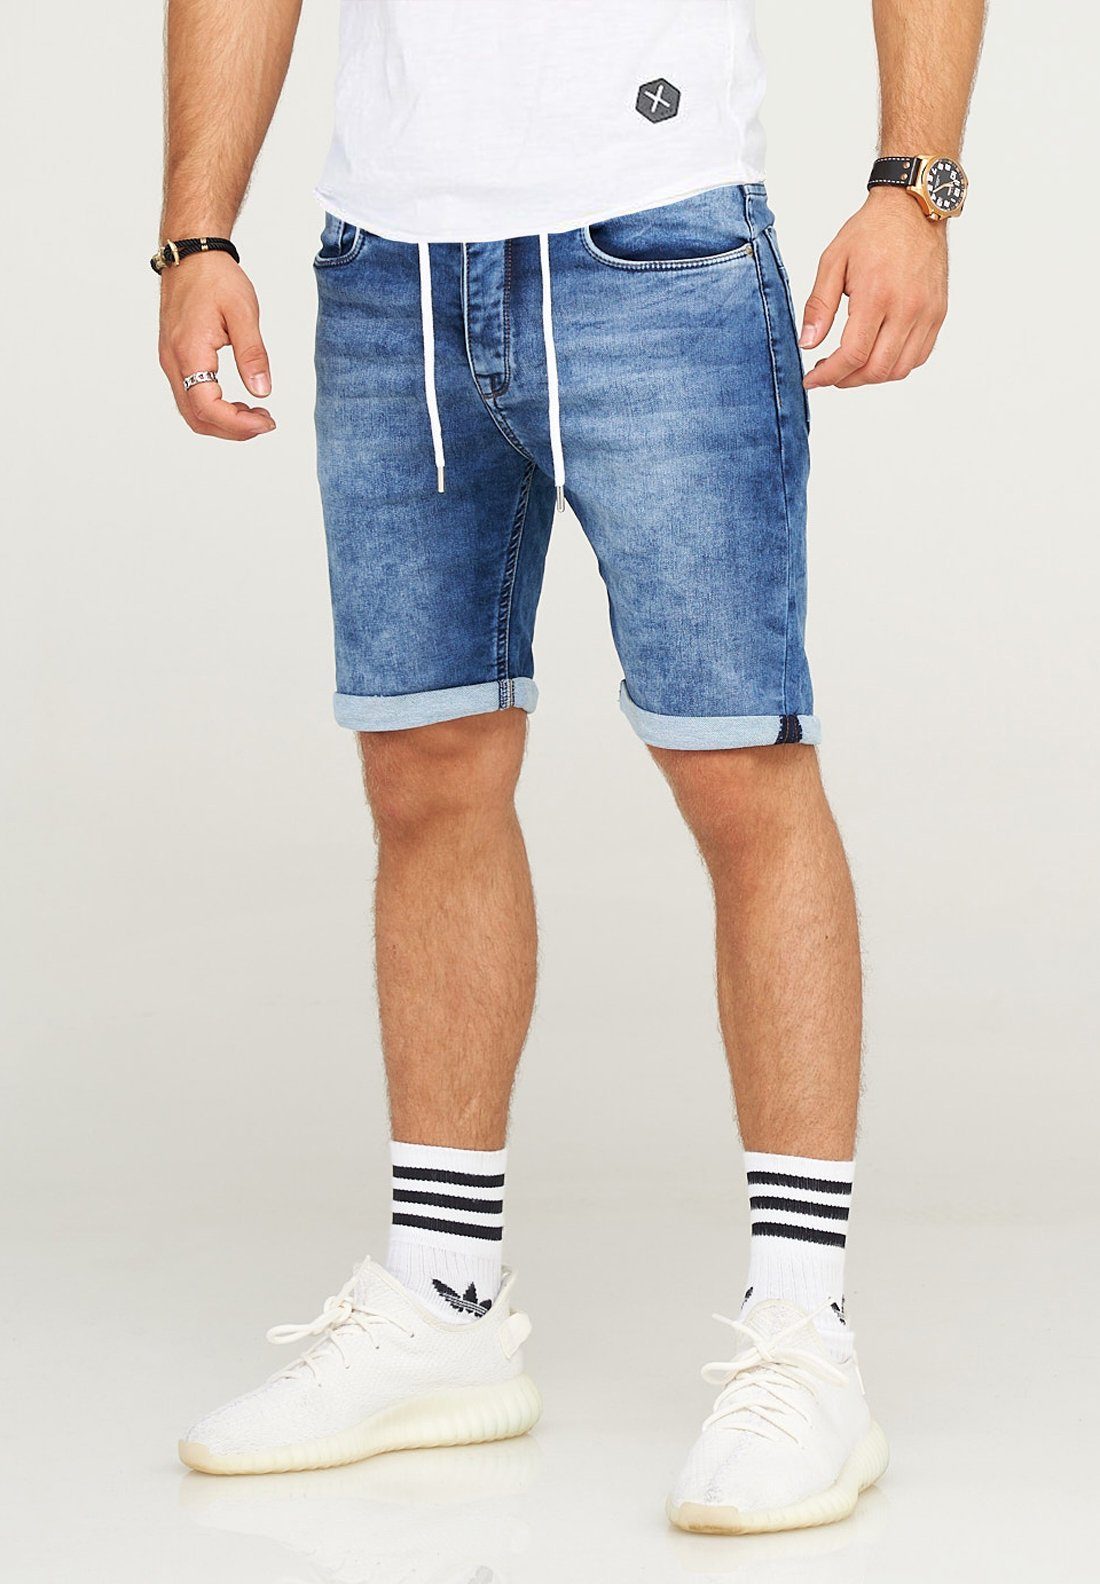 Shorts behype Jogger-Style hellblau MAKAY modernen im